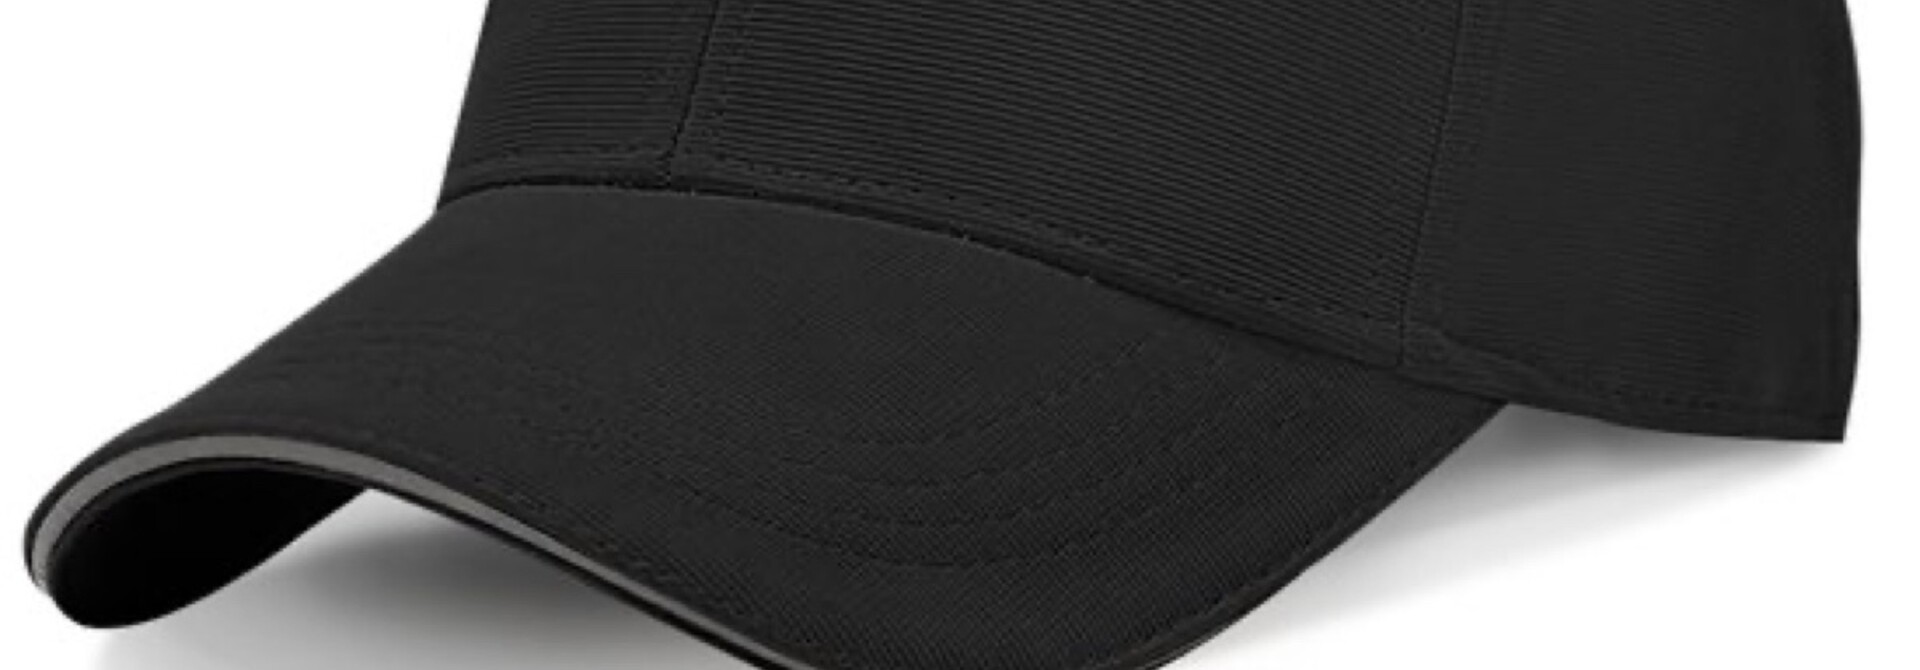 Baseball Cap -  With Reflective Edge - Adjustable Fit Cap - Trucker Hat - Head Circumference 55-60 CM - Unisex - Black